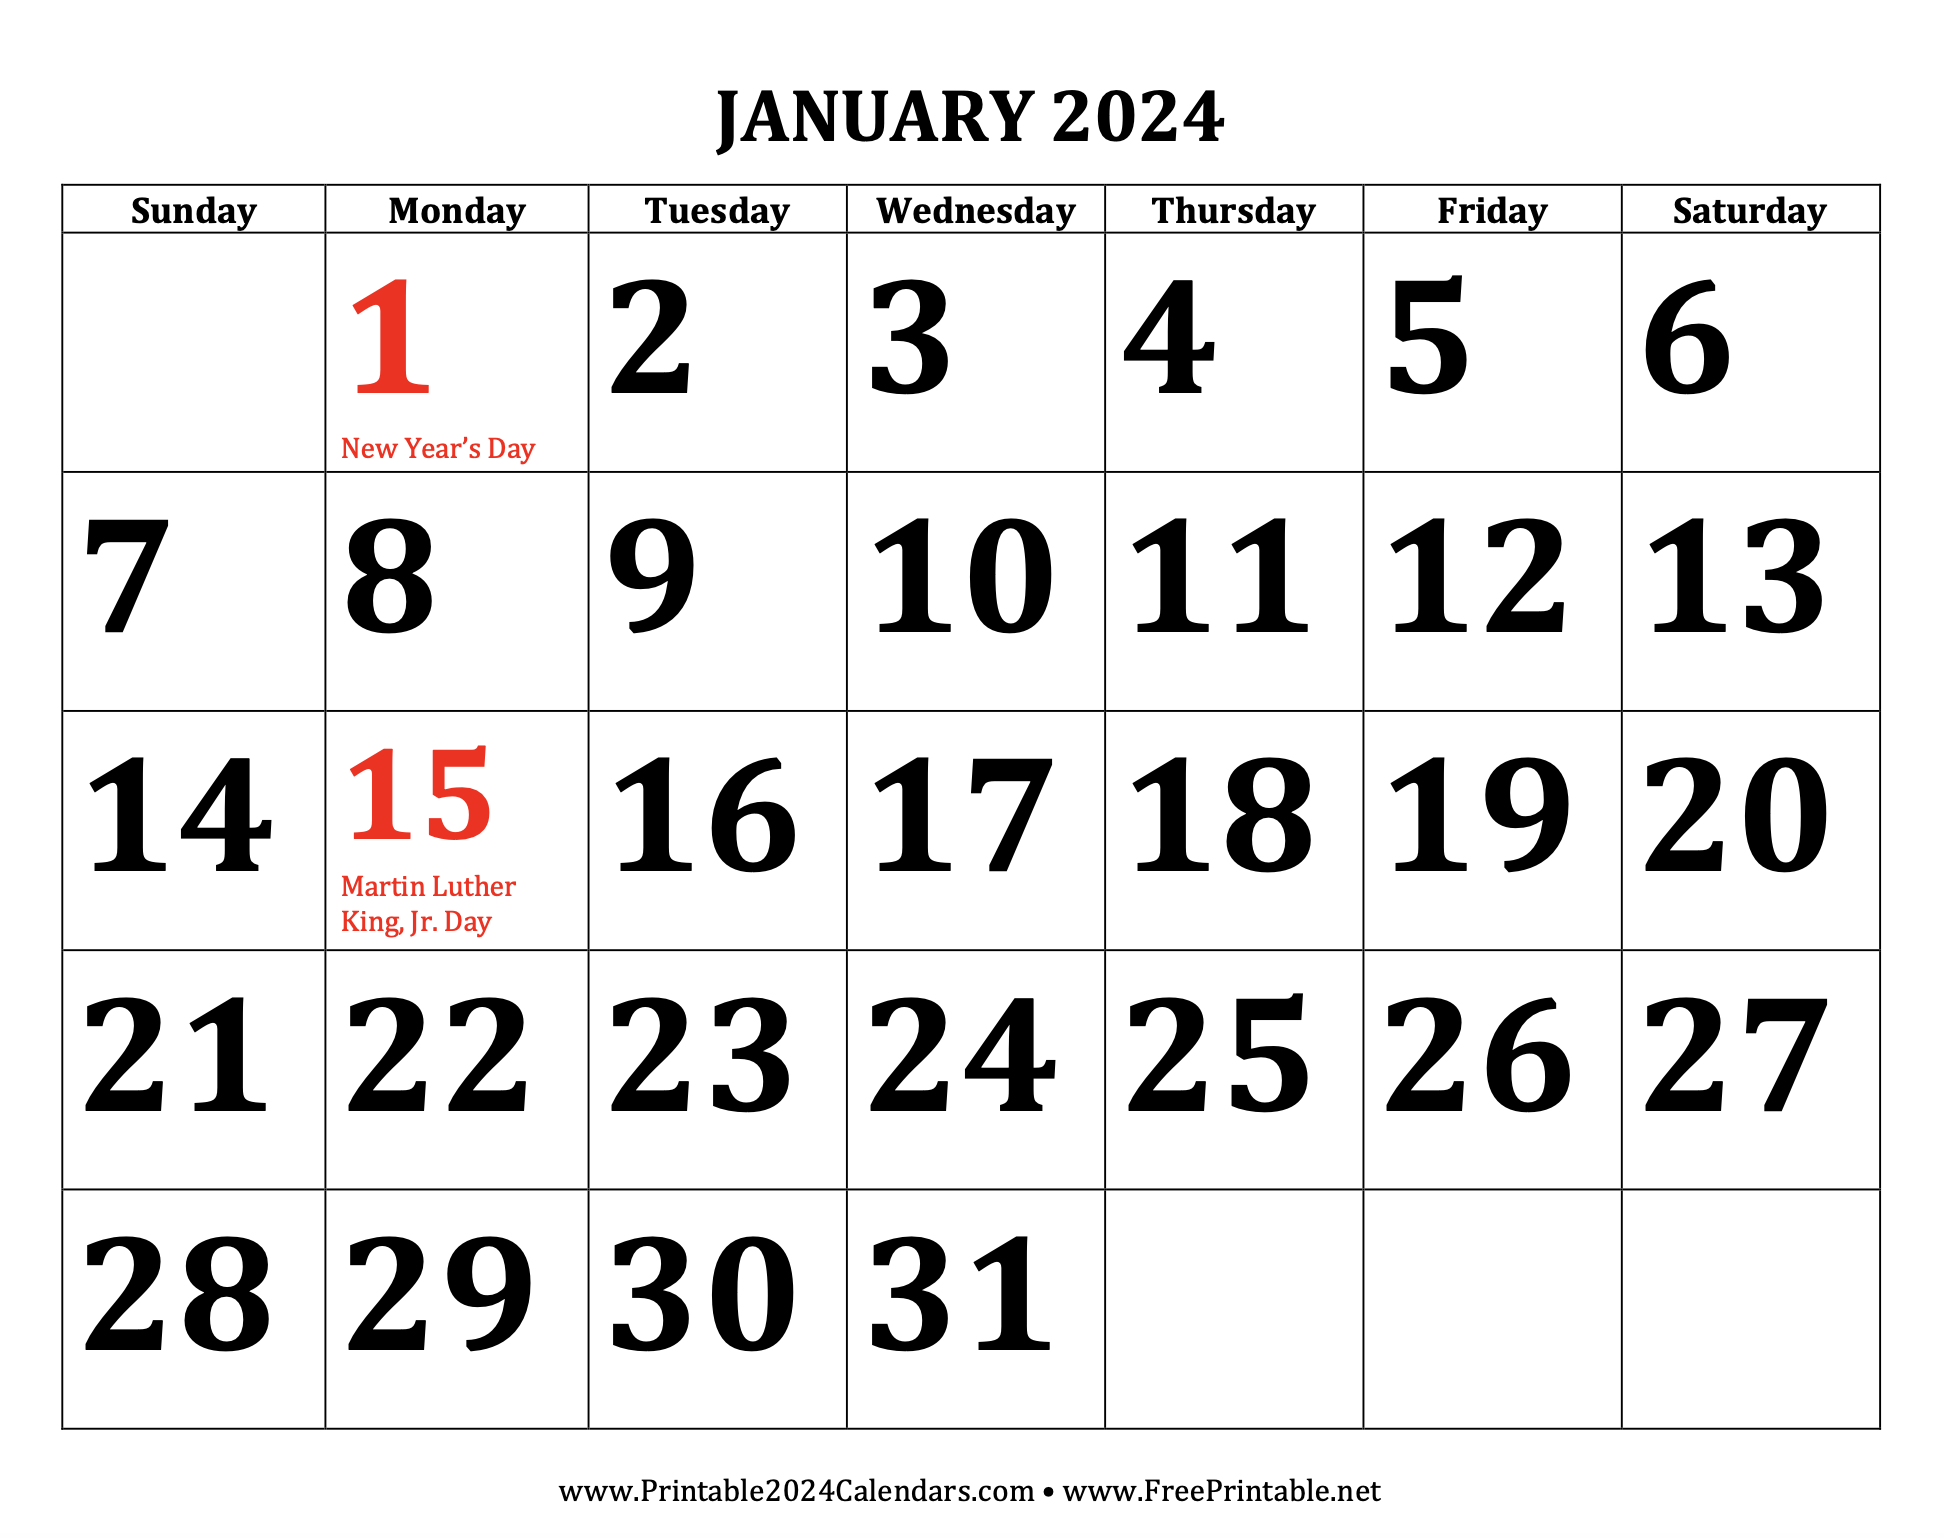 FreePrintable.net: 2024 Calendars and Hanukkah Printables